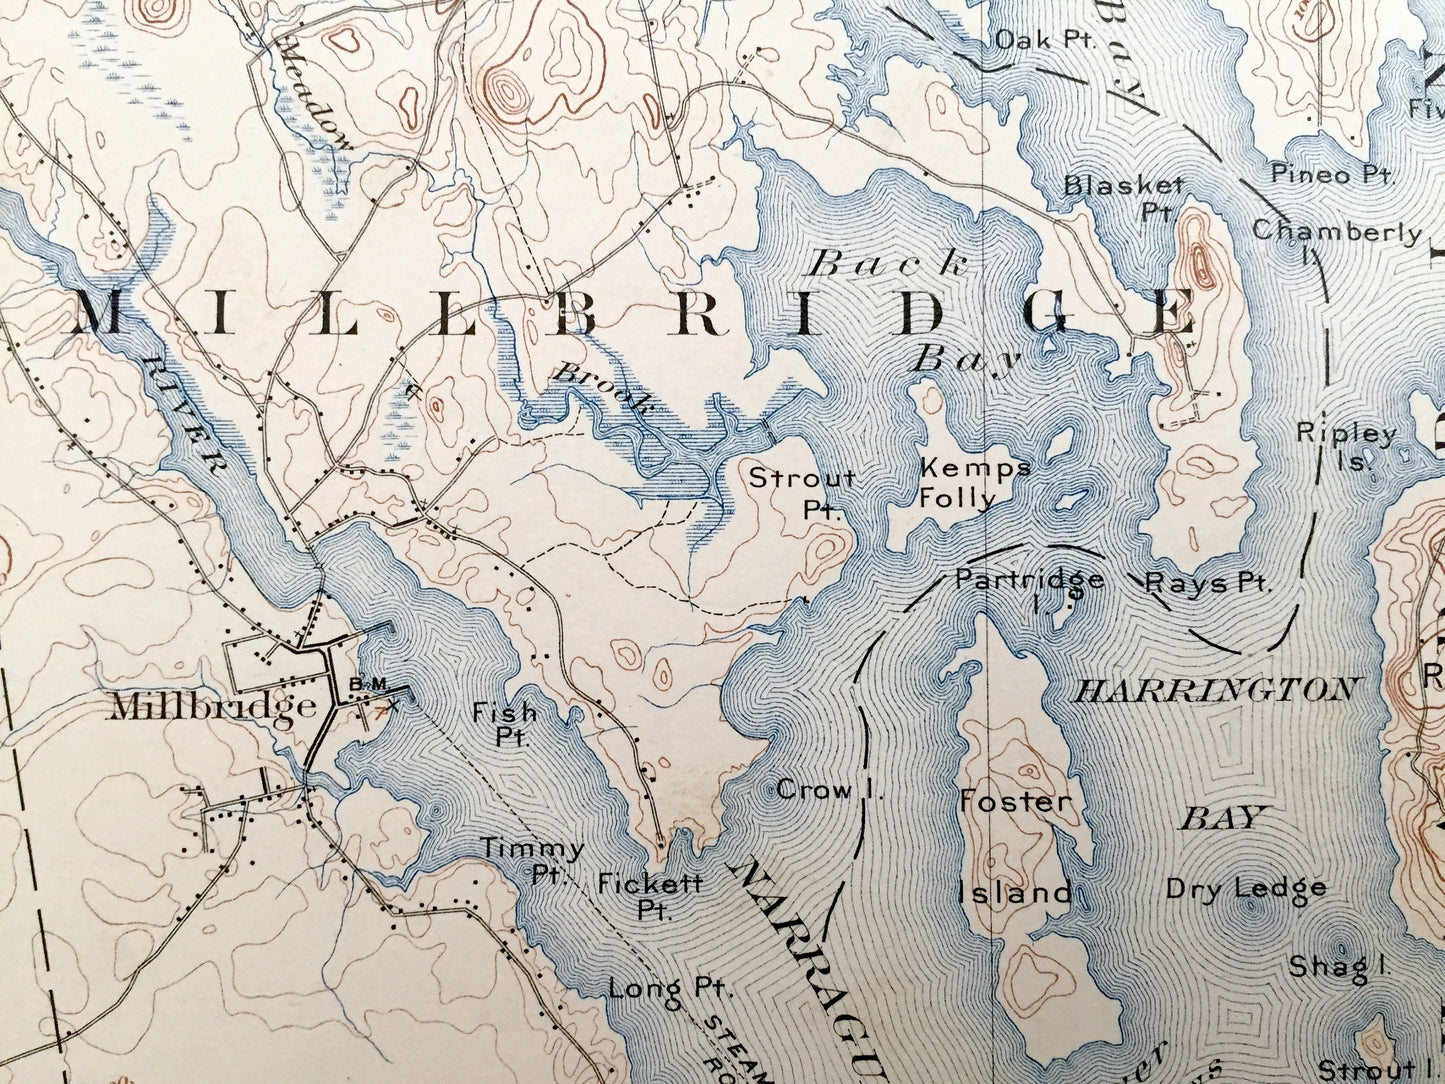 Antique Cherryfield, Maine 1904 US Geological Survey Topographic Map – Steuben, Millbridge, Harrington, Columbia, Addison, Pleasant Bay, ME